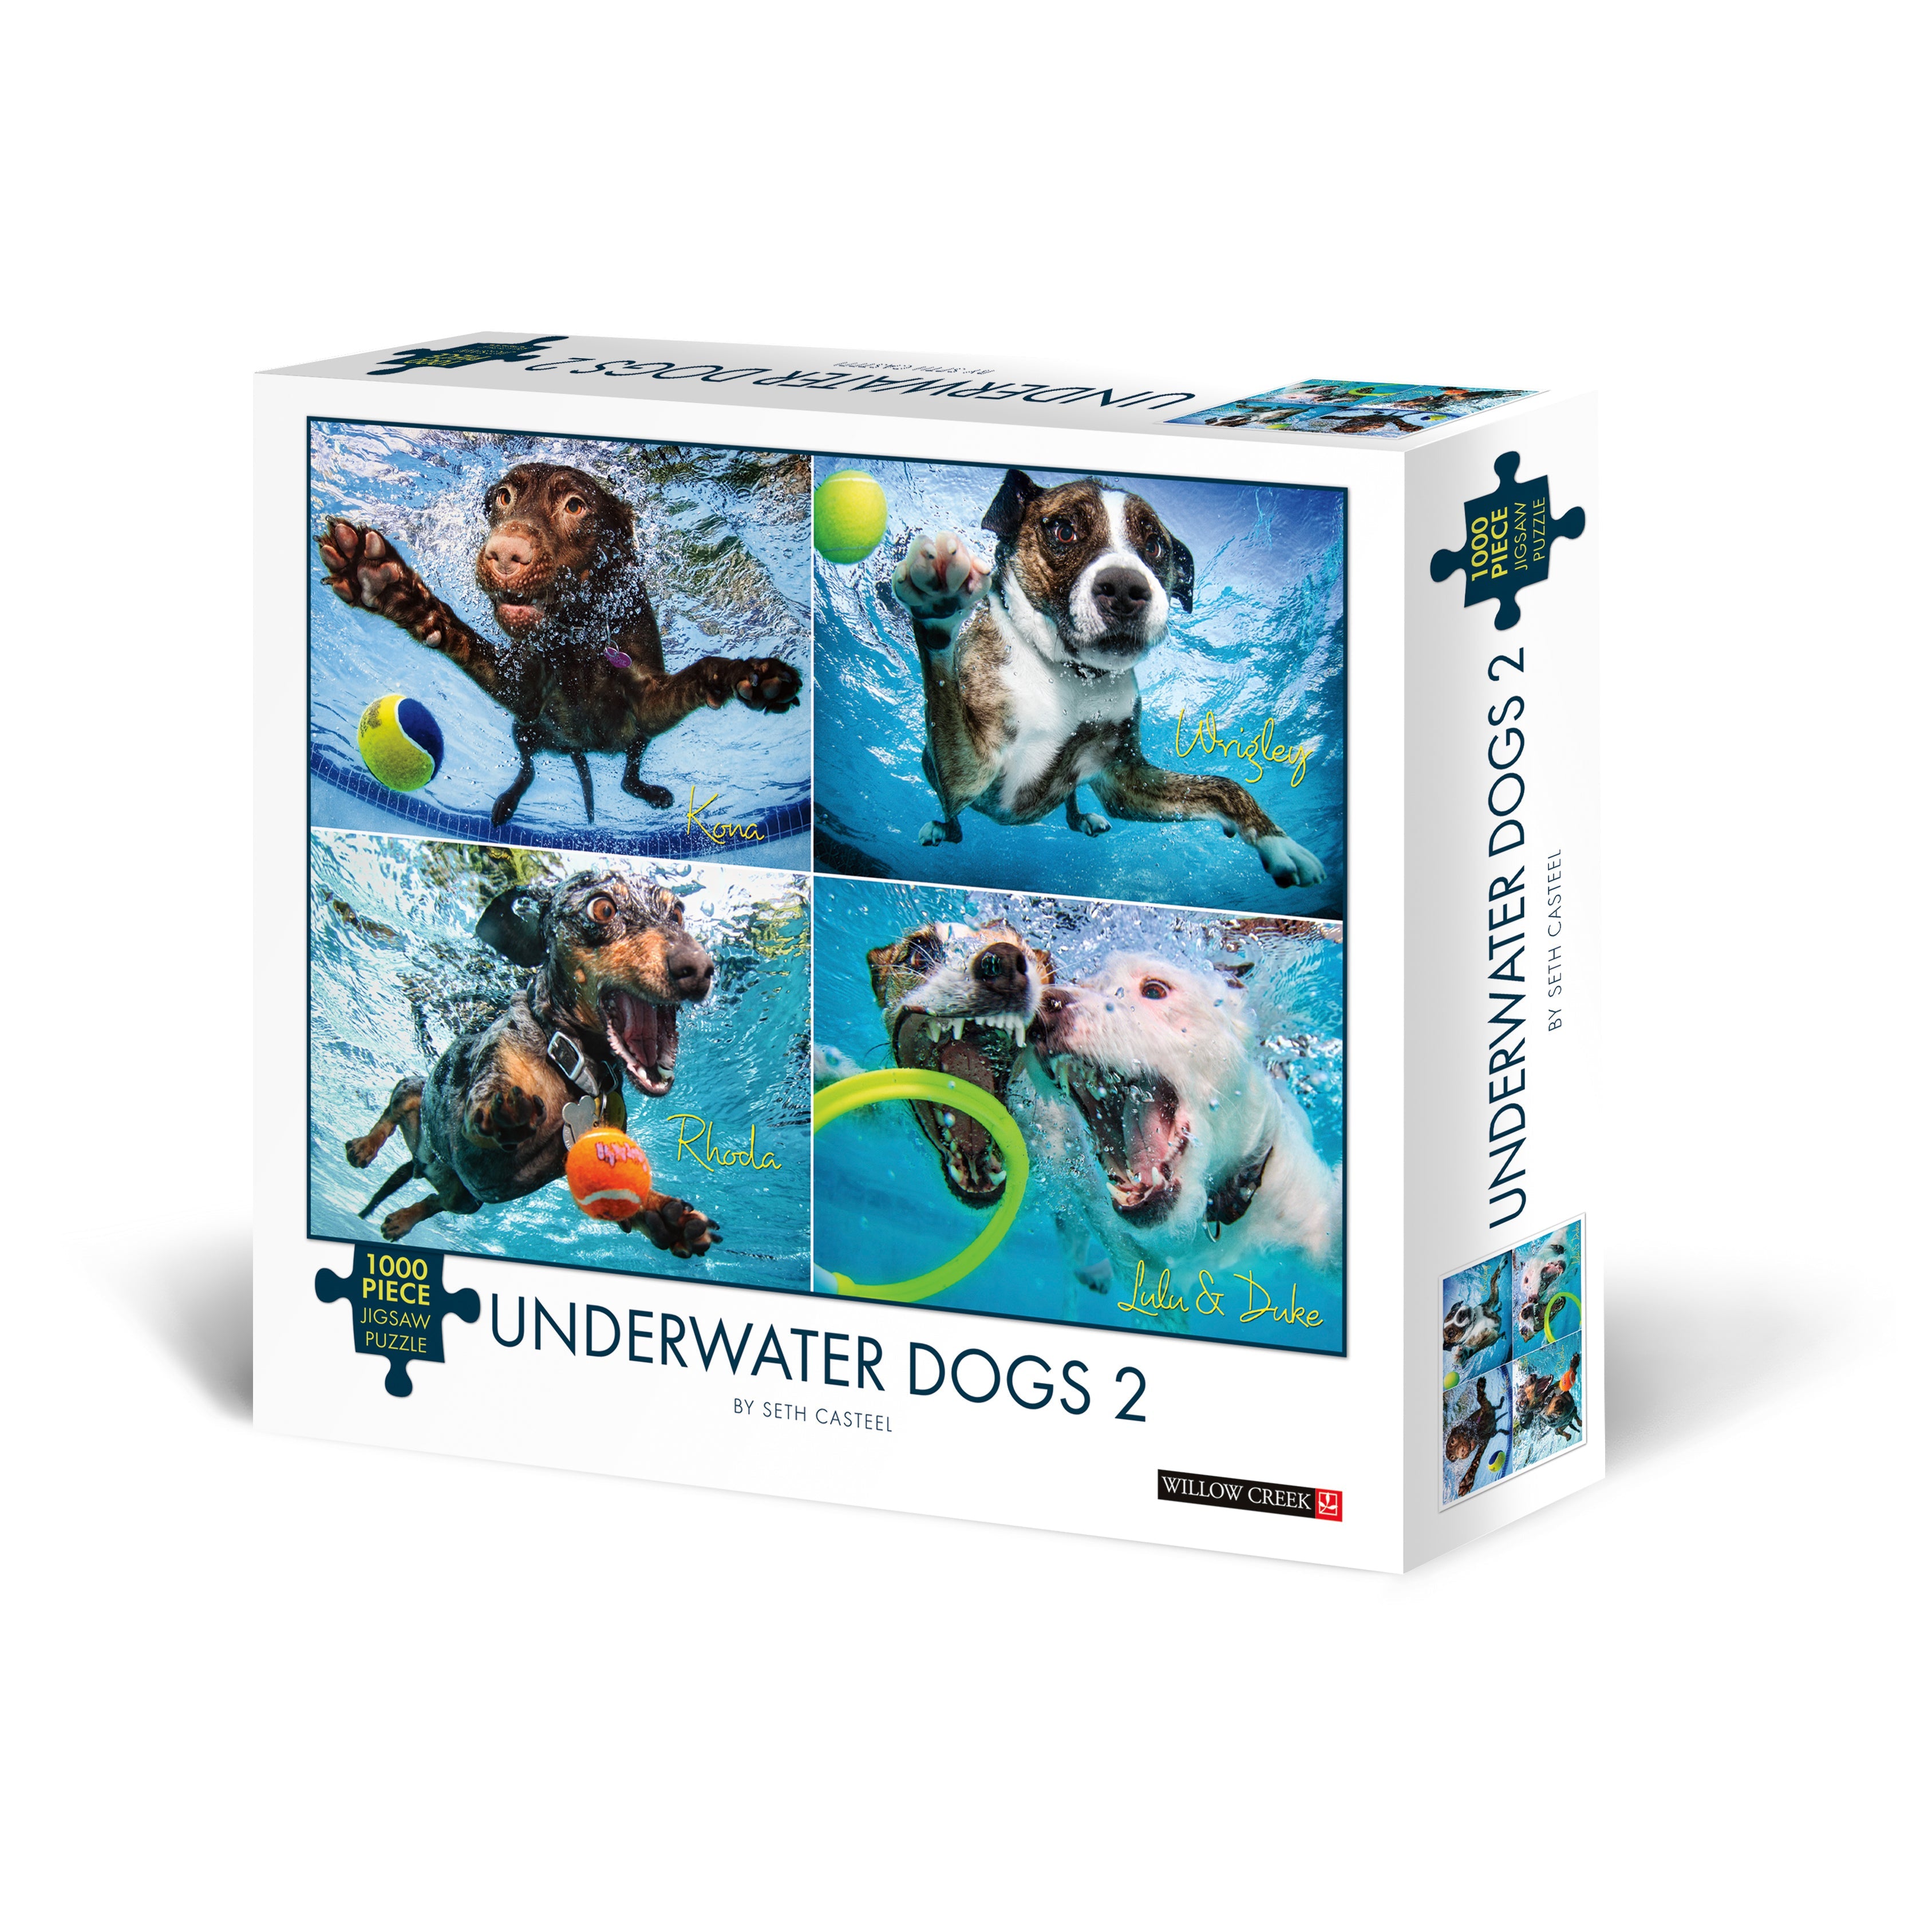 Underwater Dogs 2 1000 Piece - Jigsaw Puzzle